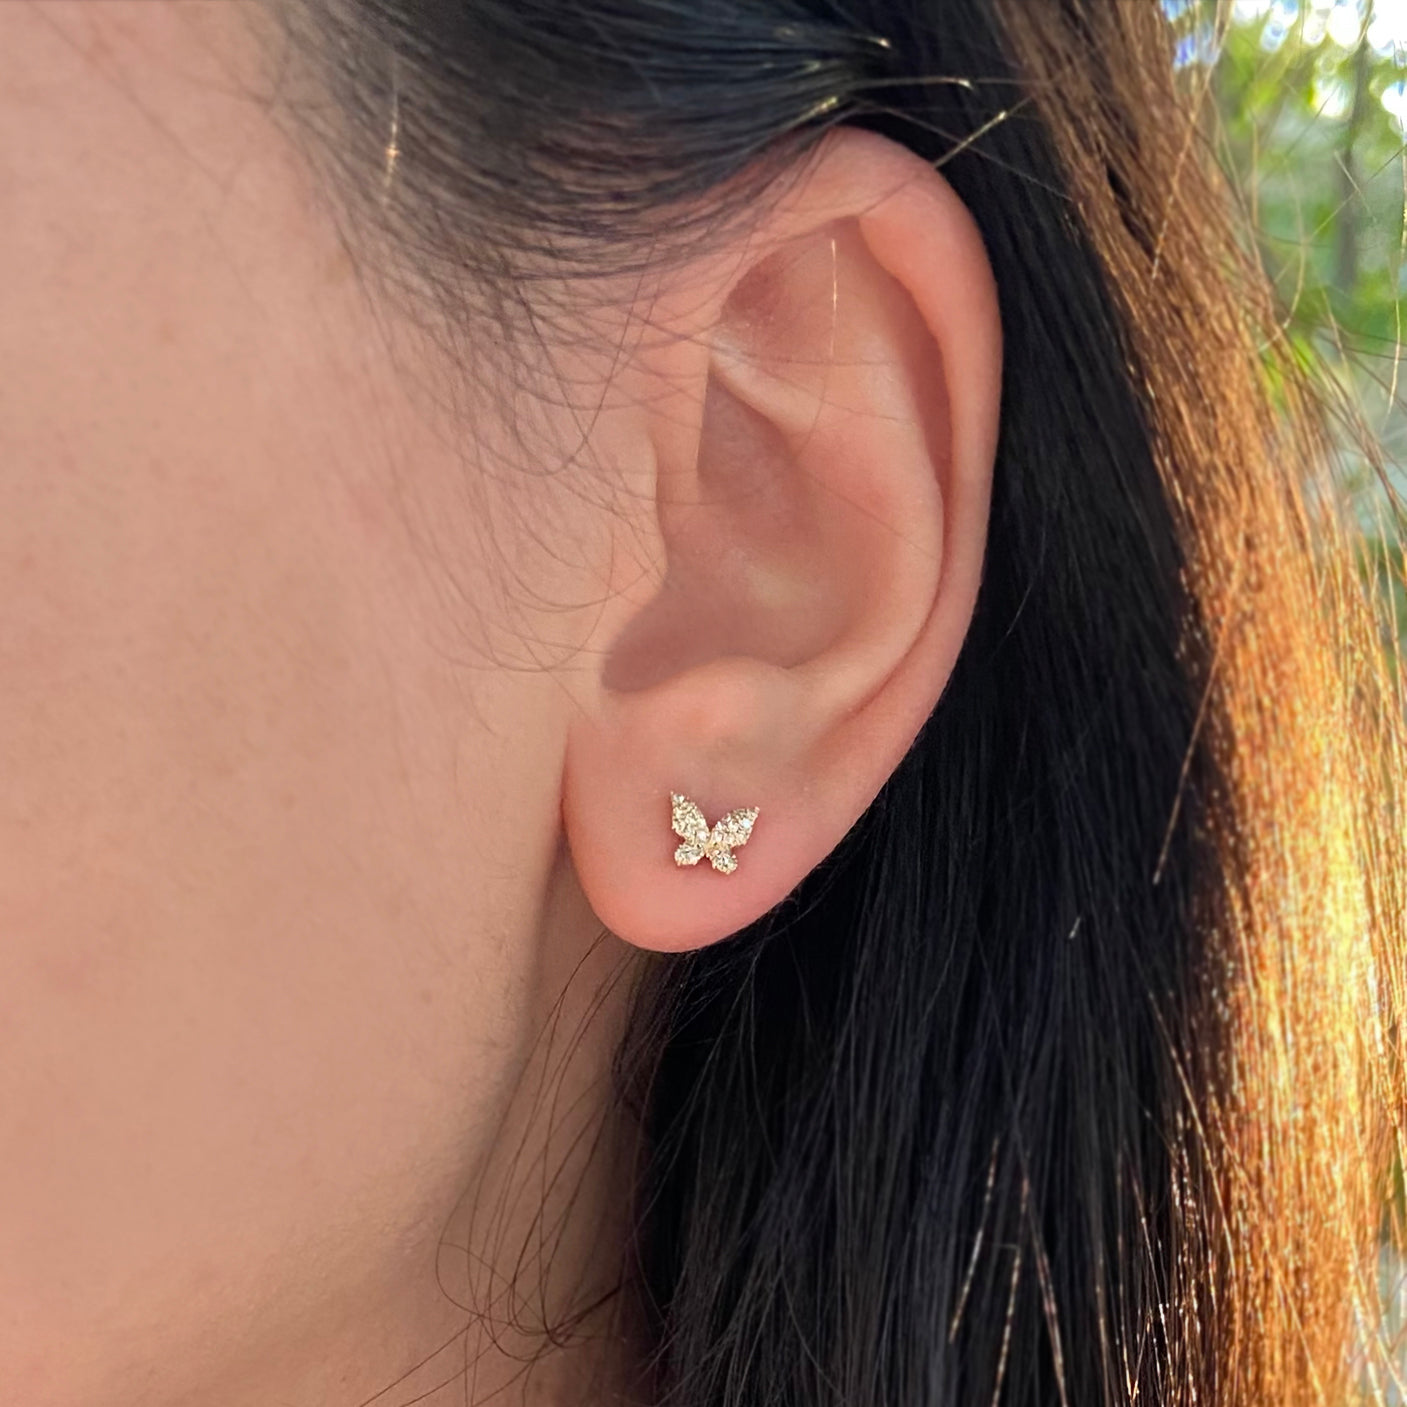 14k Gold Natural Round Diamond Stud Earrings Child Second Hole | eBay